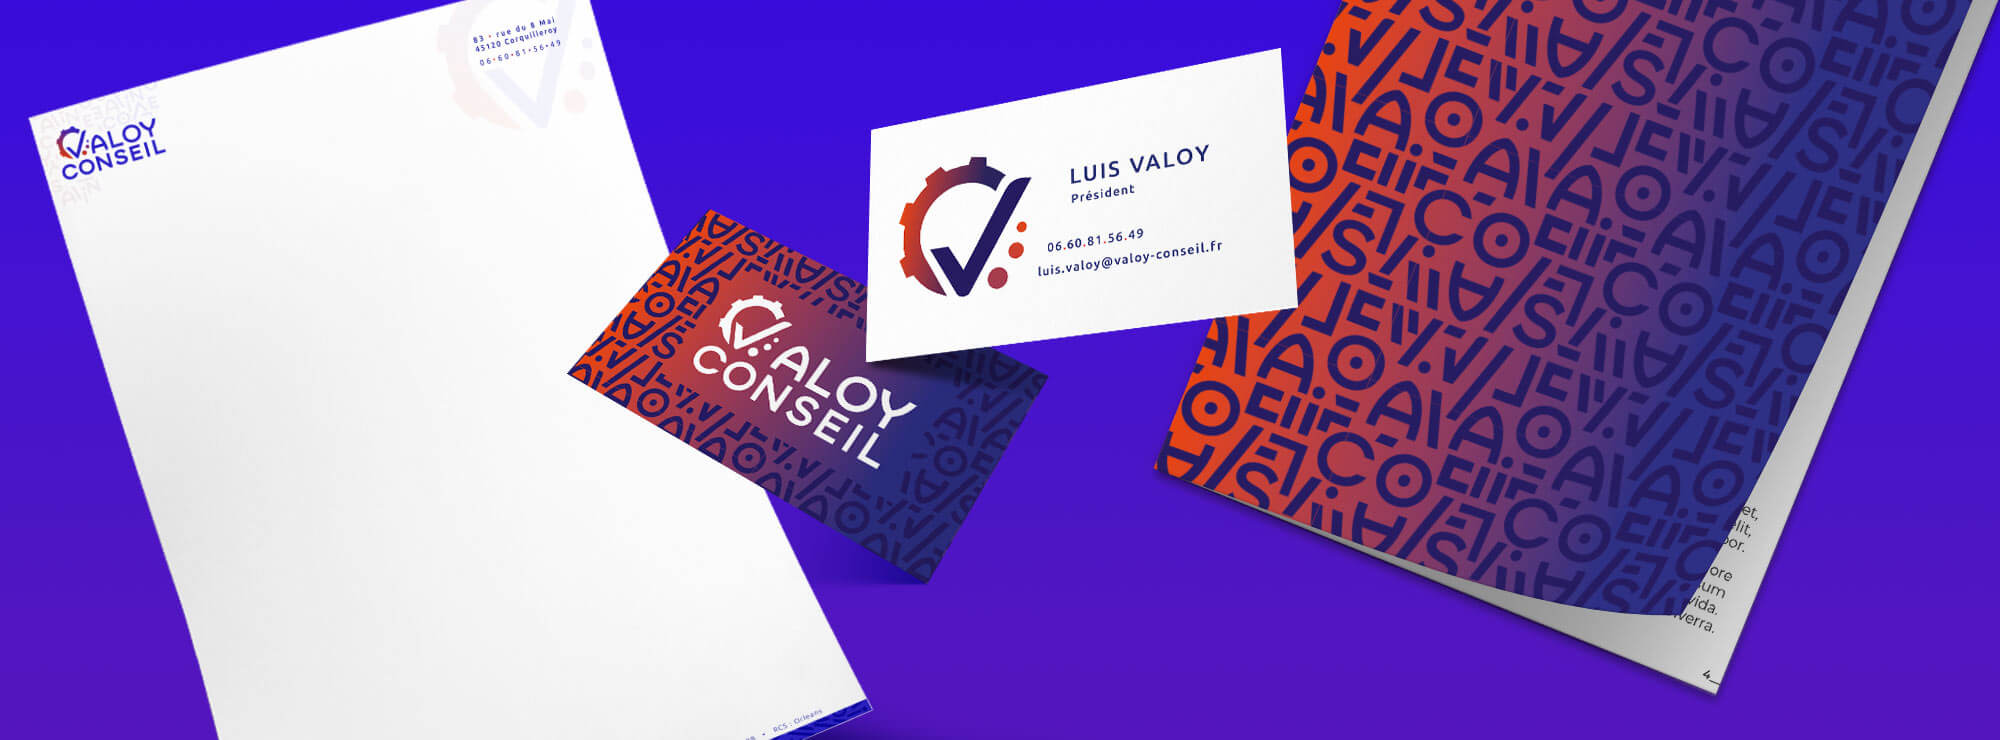 03 valoyconseil conseil visualidentity logo patern businesscard letterhead print.jpg